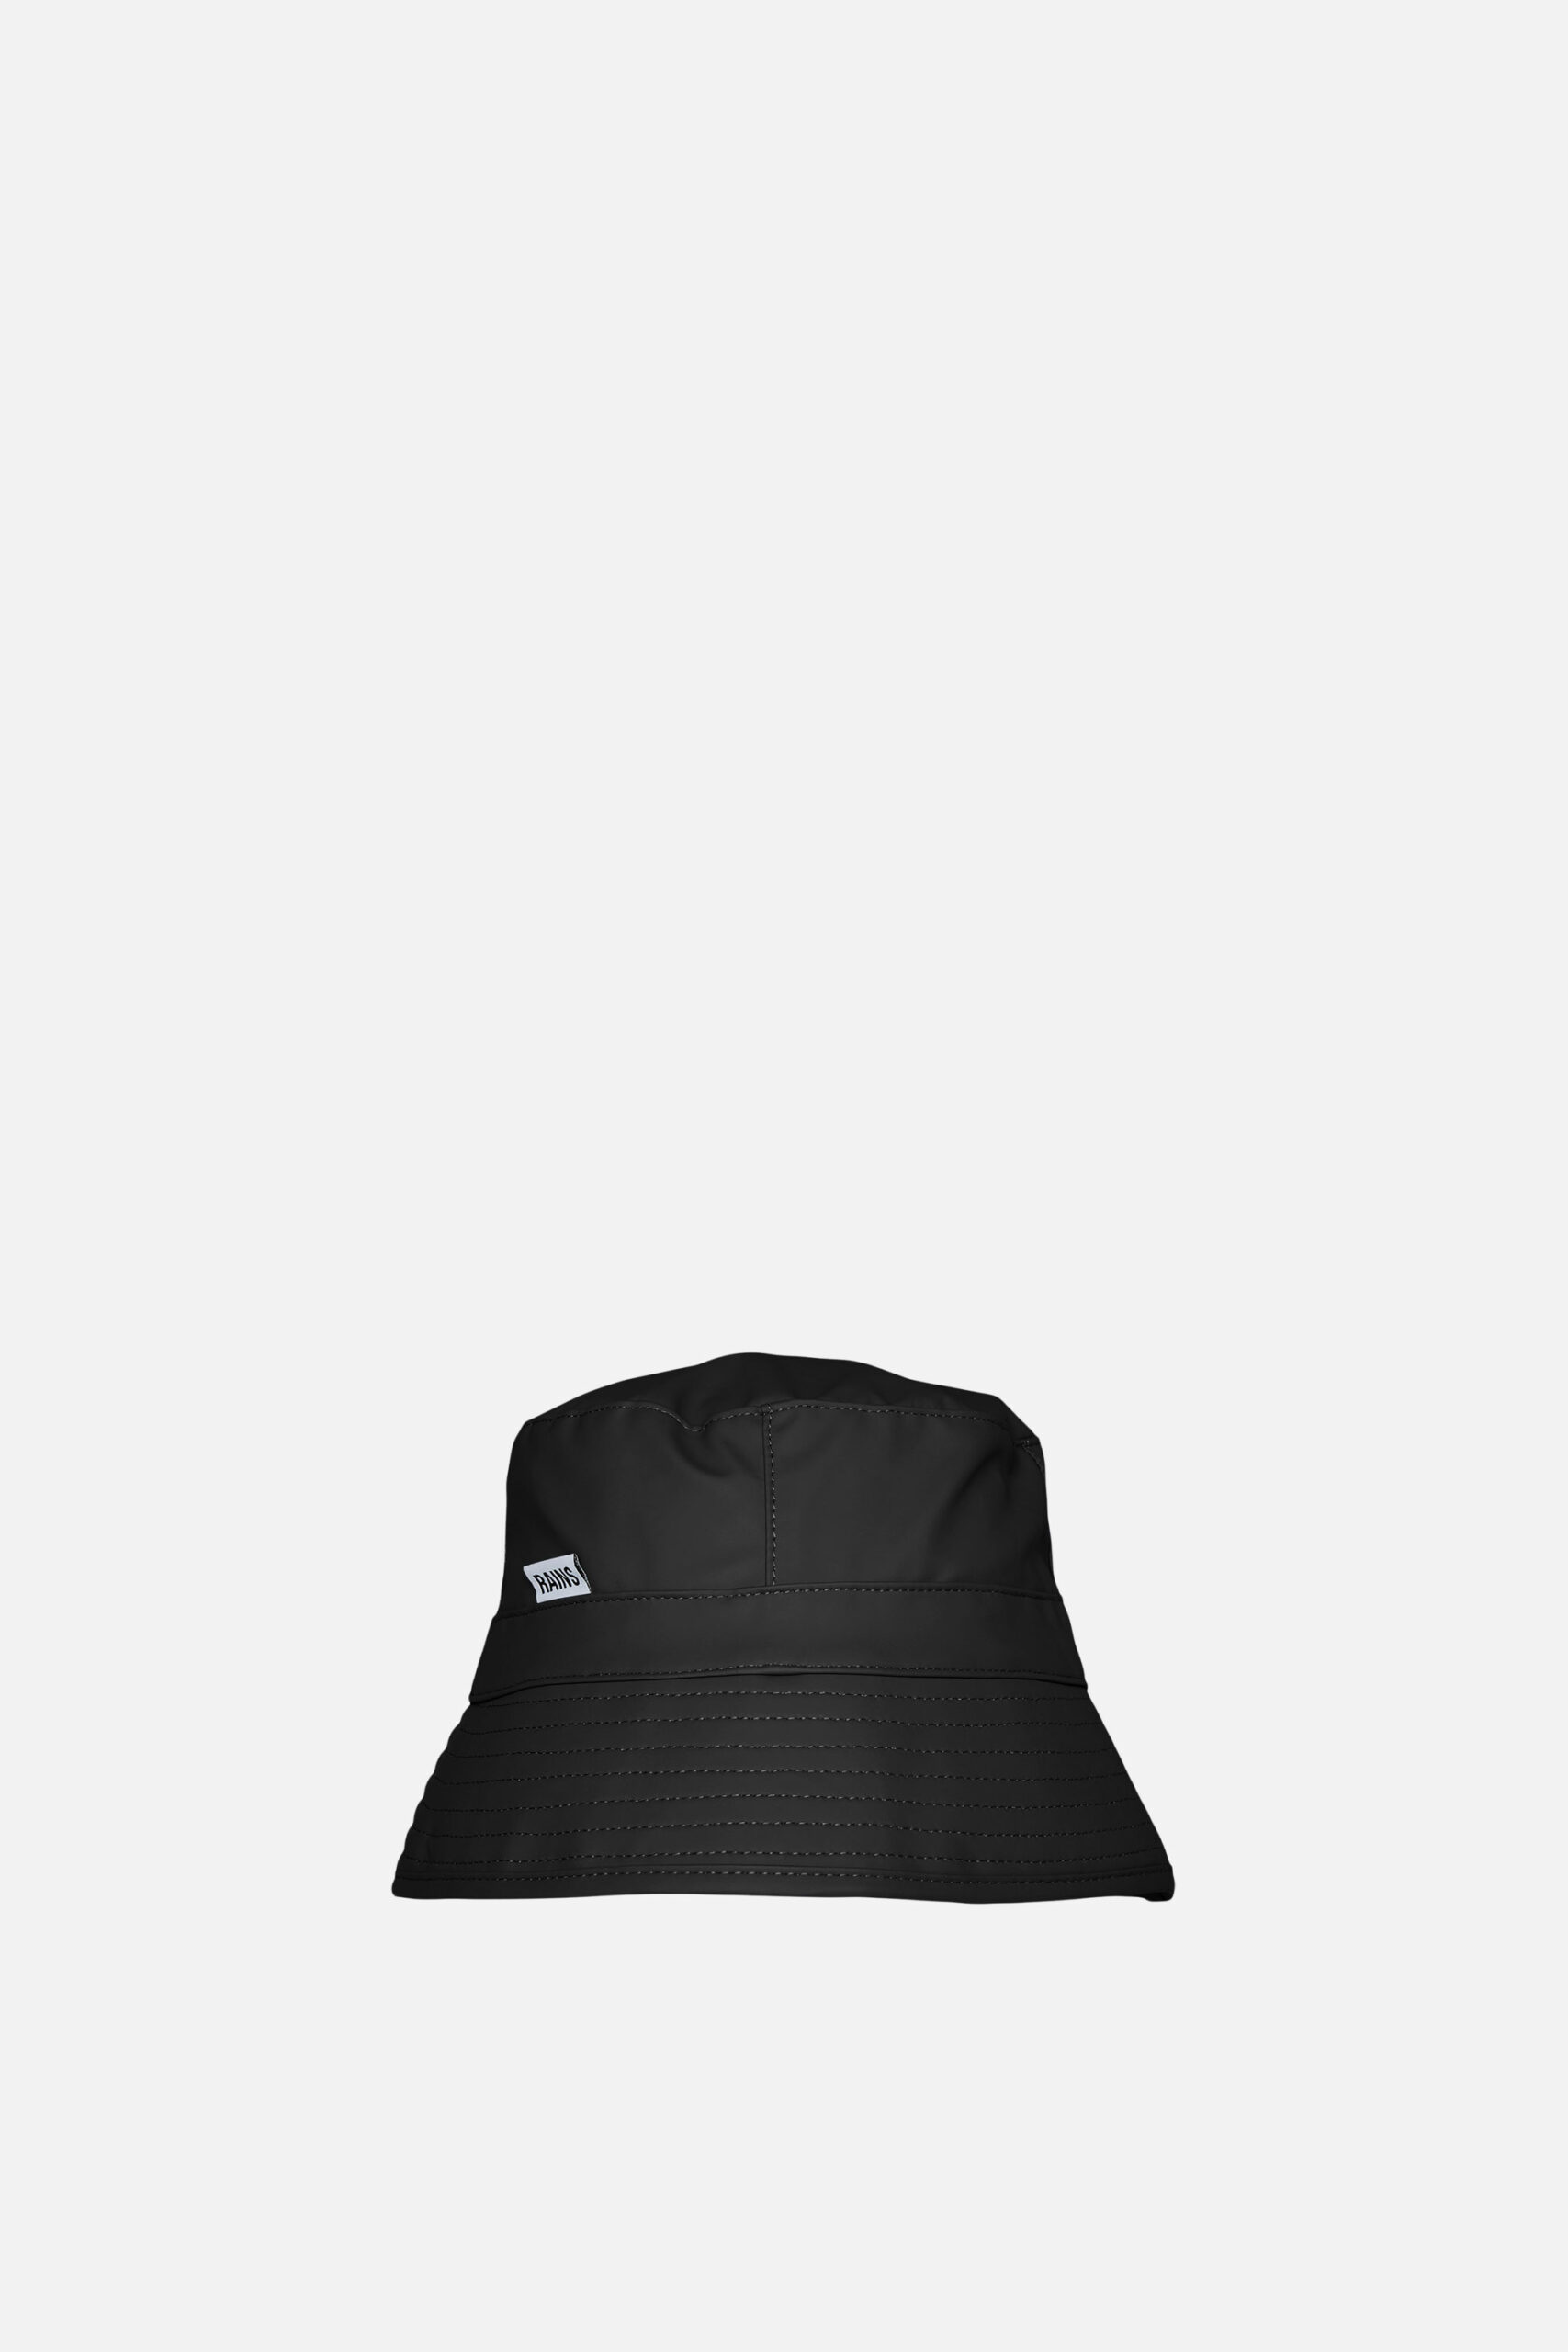 Bucket Black Hat - Shop - Matchbox